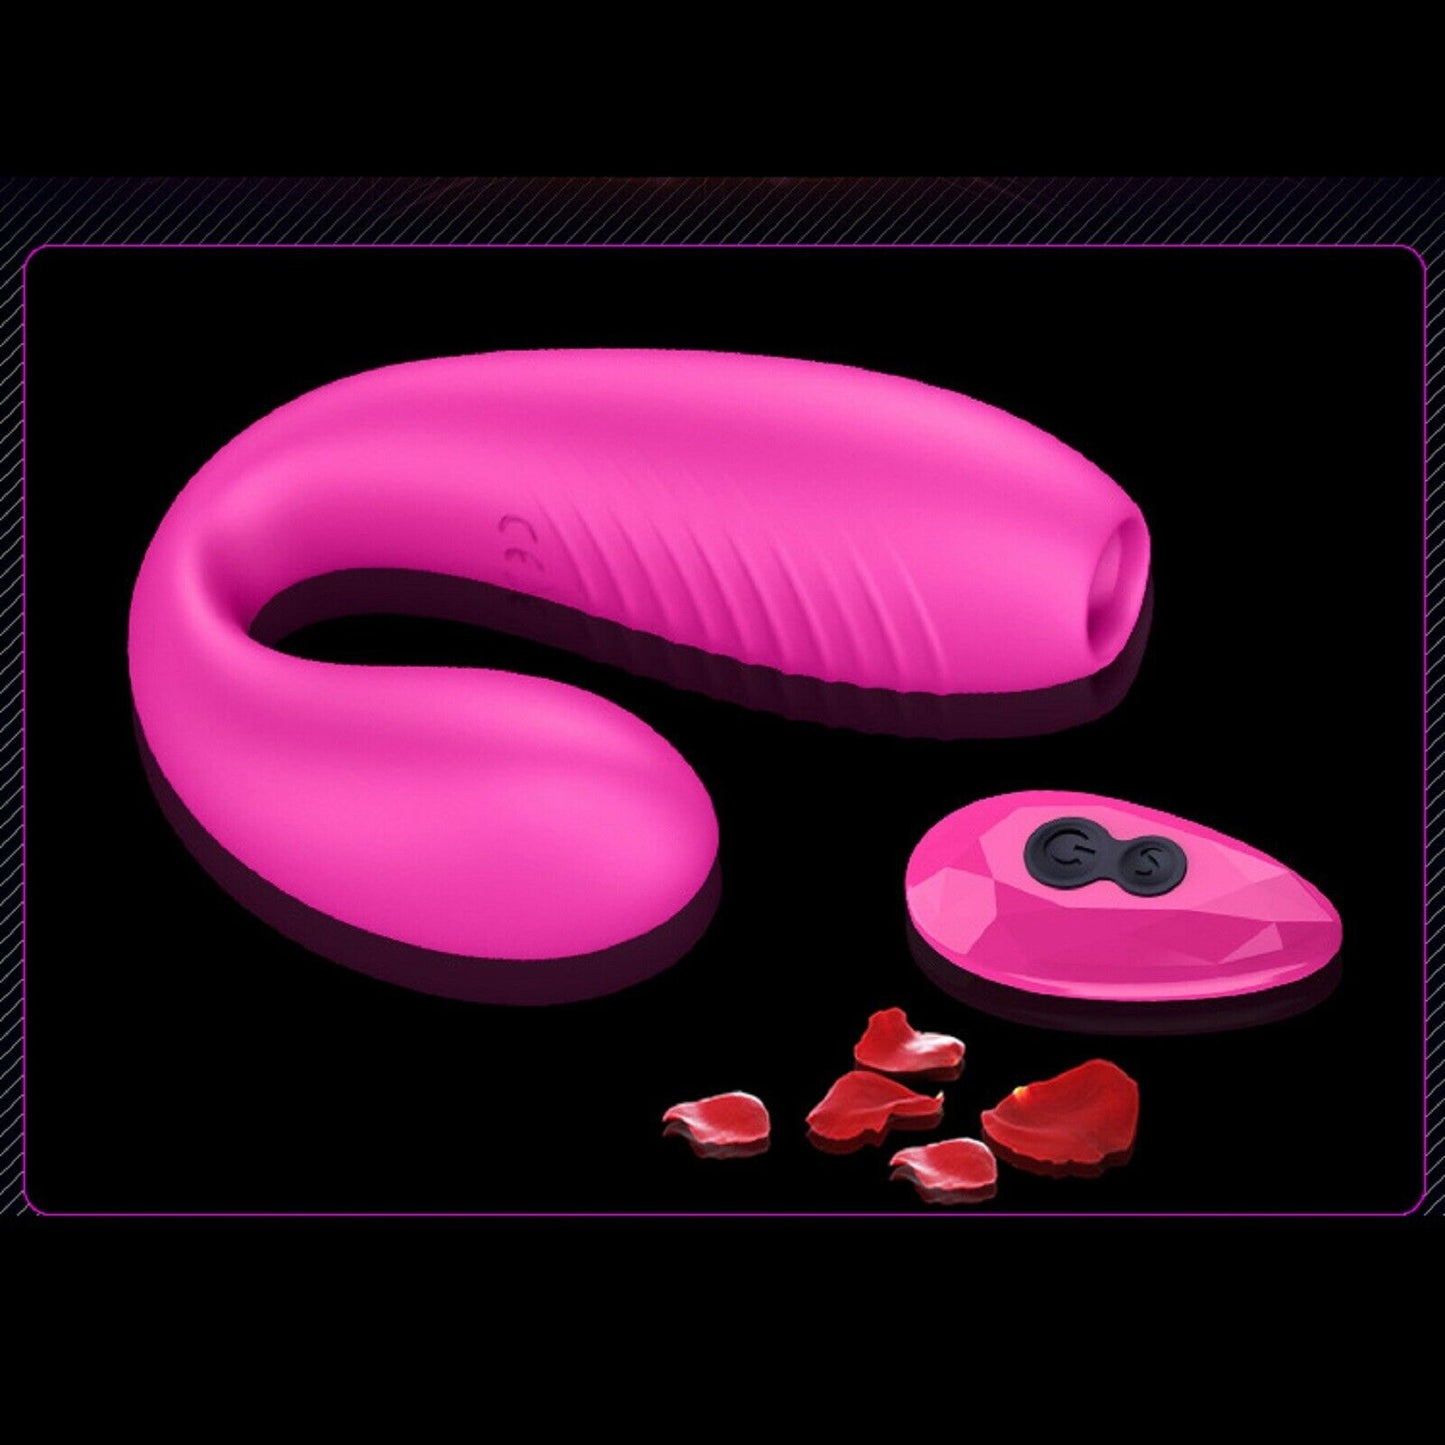 Vibrator Sucking G Spot Clitoral Stimulator Remote Control Bullet Adult Sex Toy